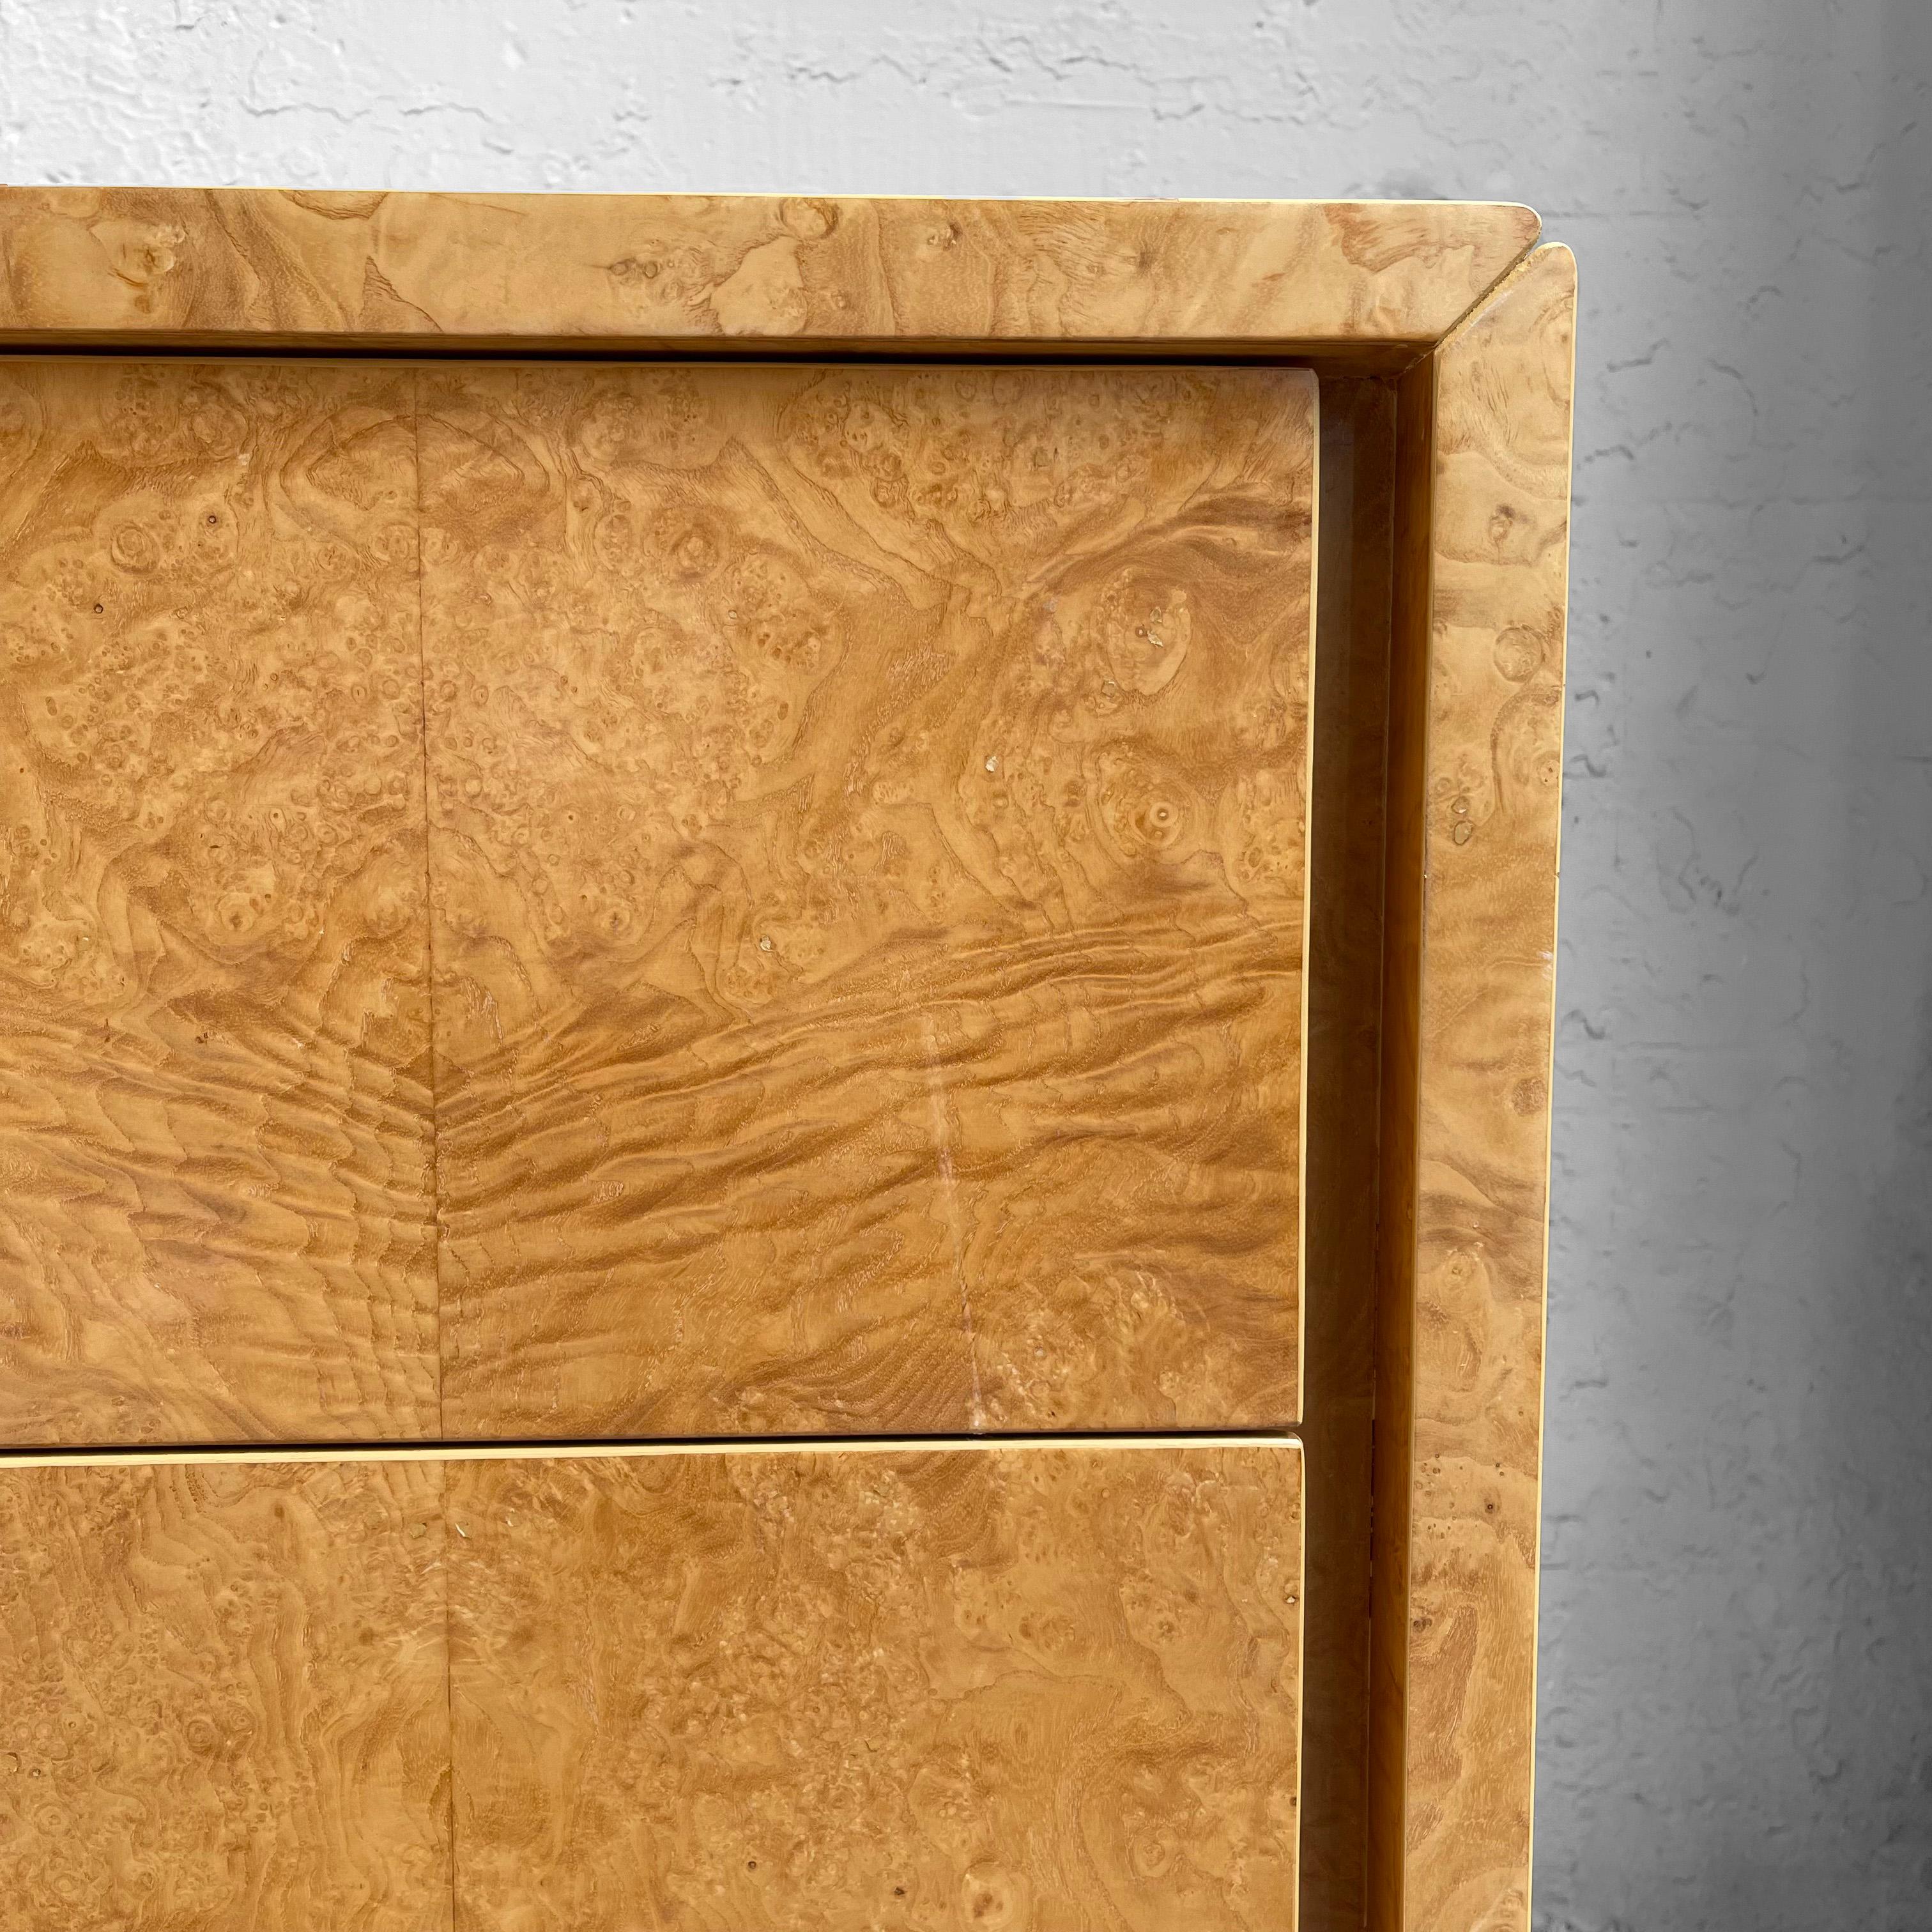 Burl Olive Wood Dresser by Paul Mayen for Habitat 2